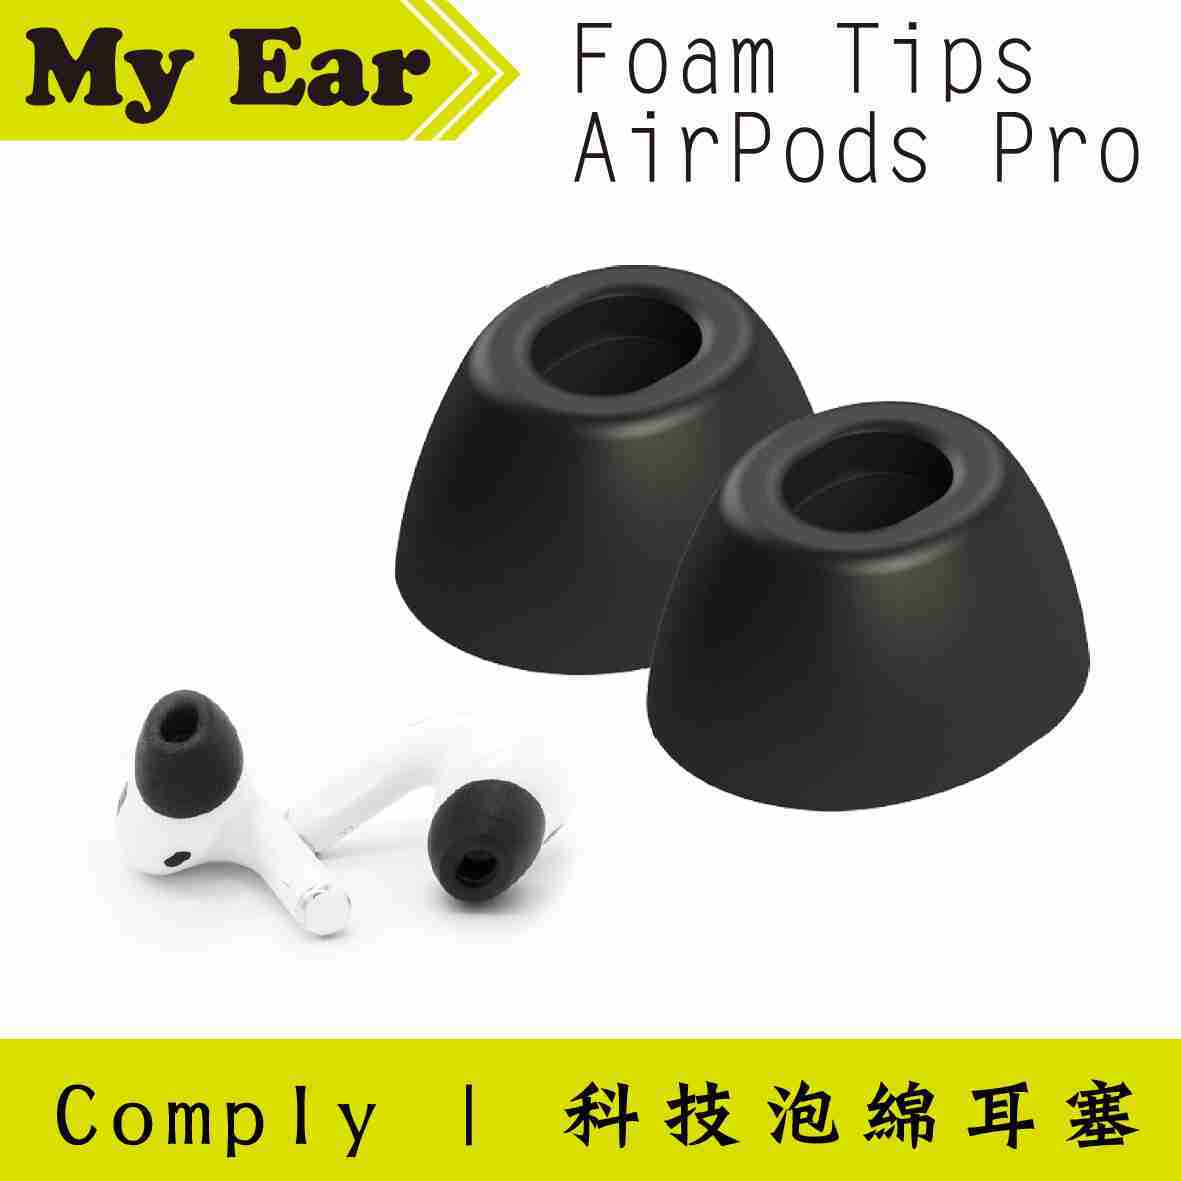 Comply Foam Tips AirPods Pro 專用 科技泡綿 耳塞 | My Ear 耳機專門店